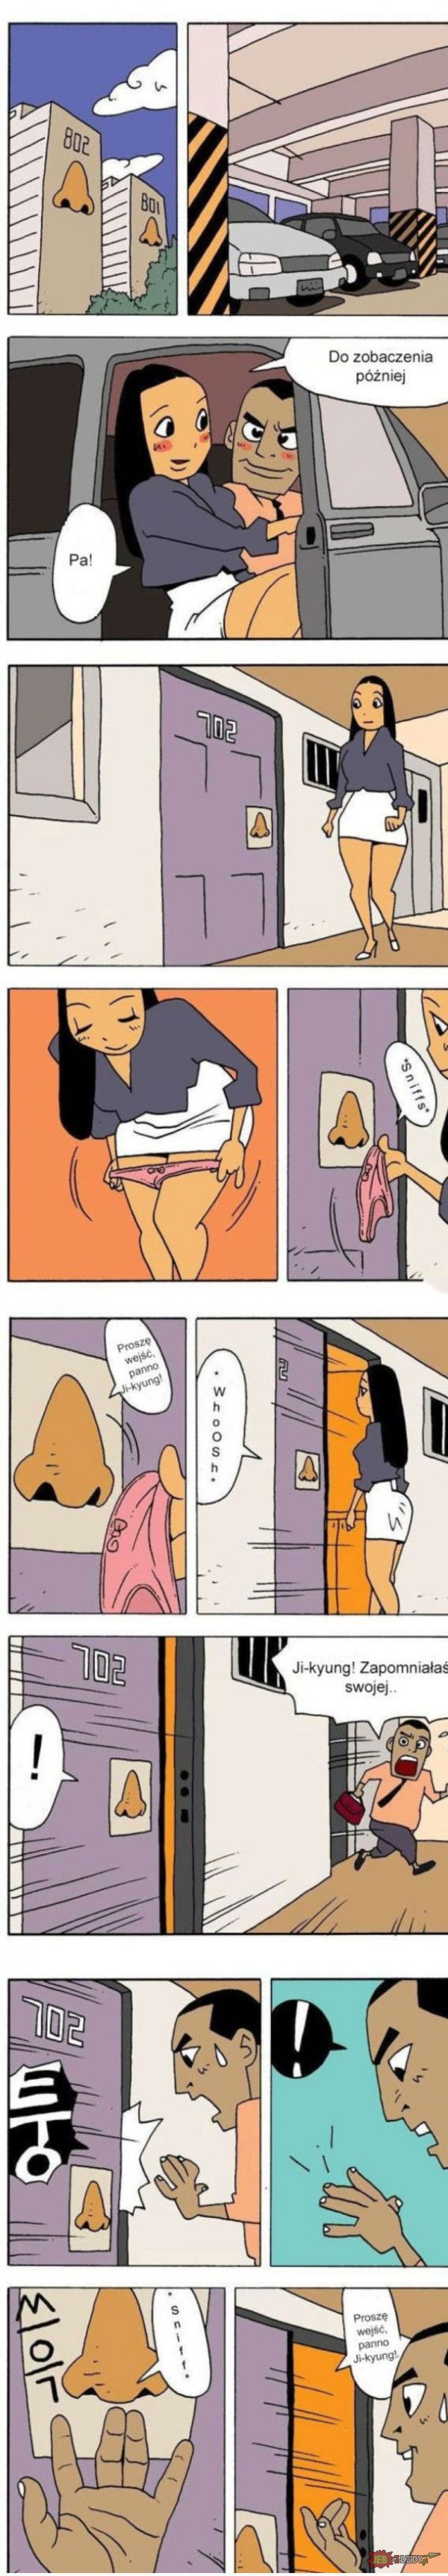 Japonia komiks porno